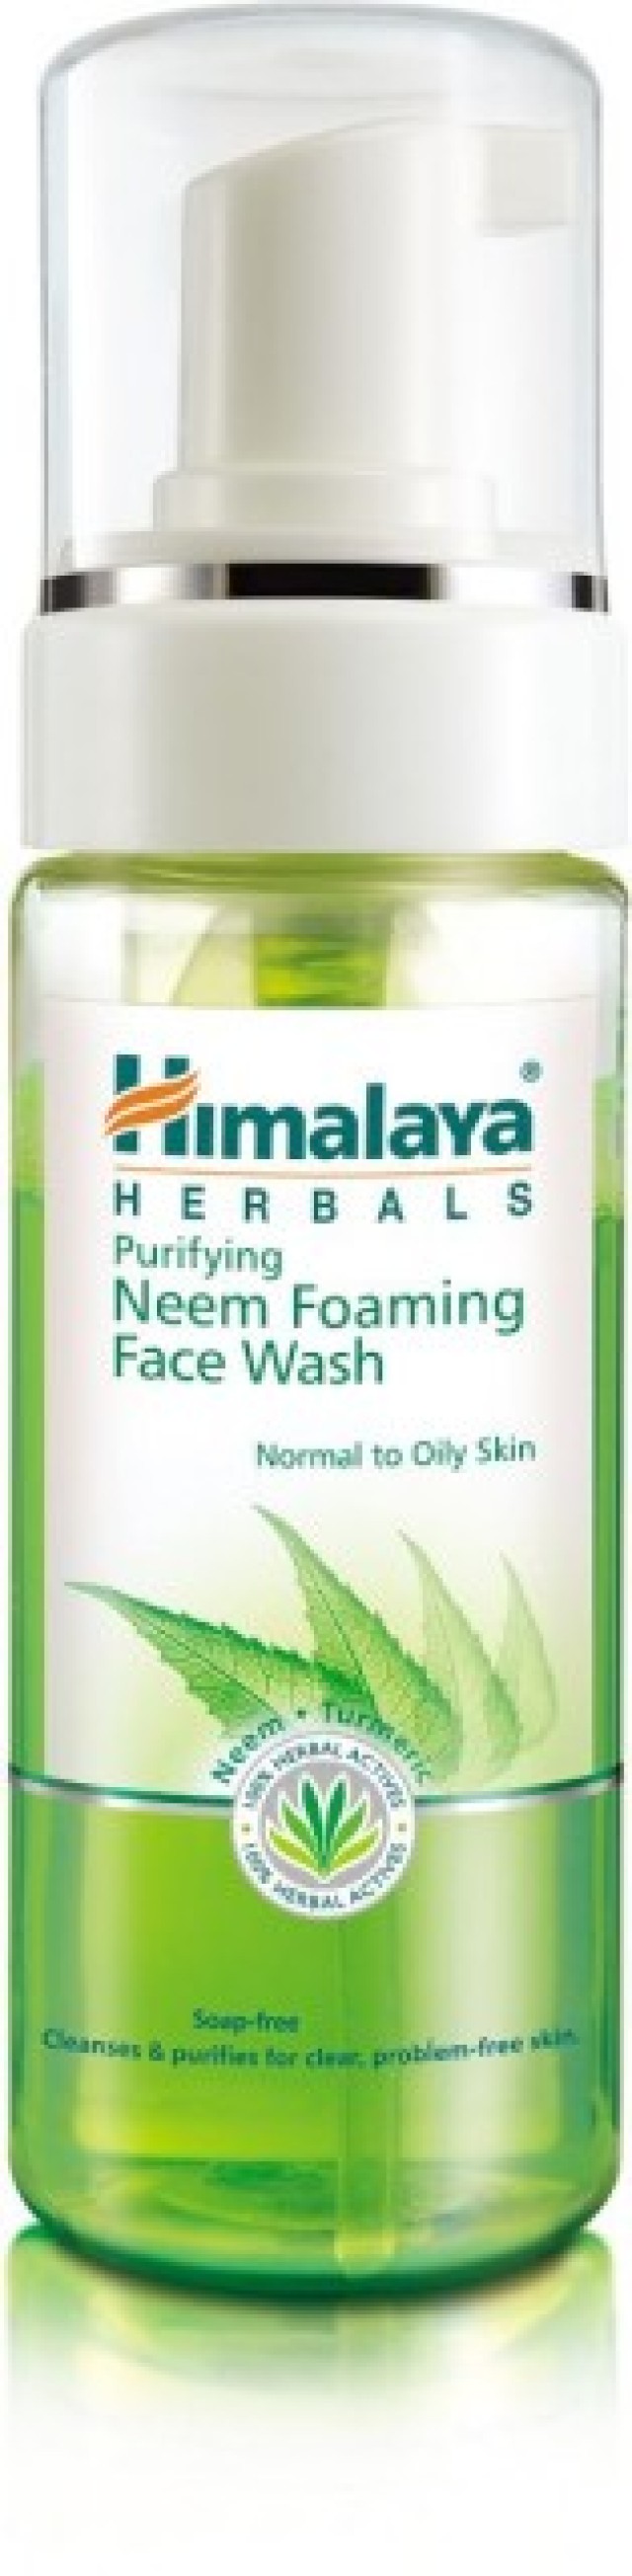 Himalaya Neem Foaming Face Wash 150ml